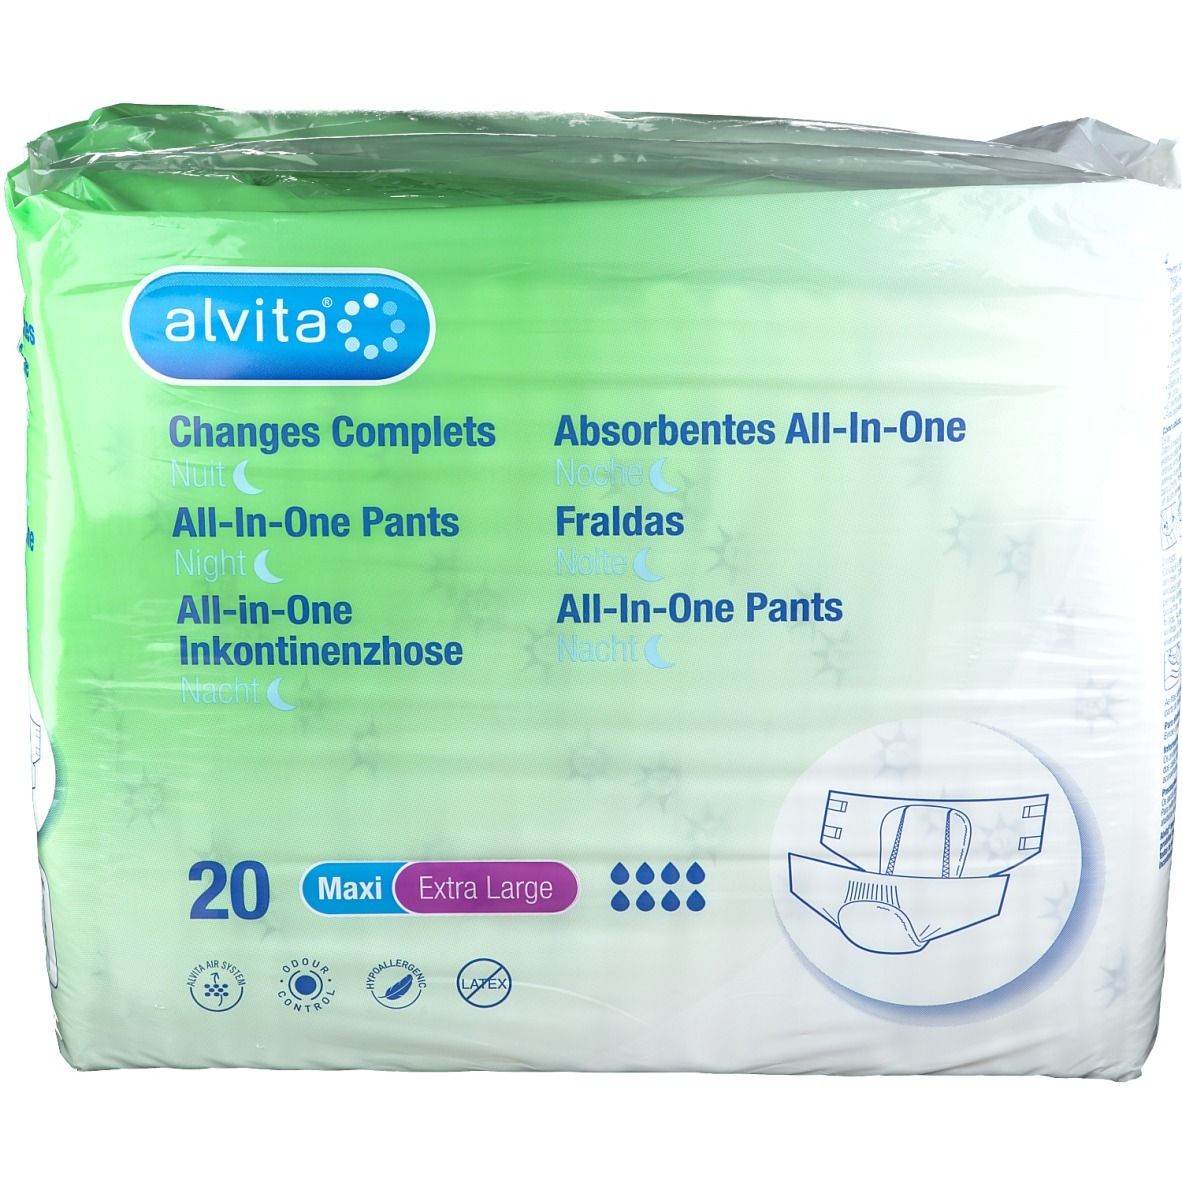 alvita® All-in-One Inkontinenzhosen Maxi Extra Large Nacht